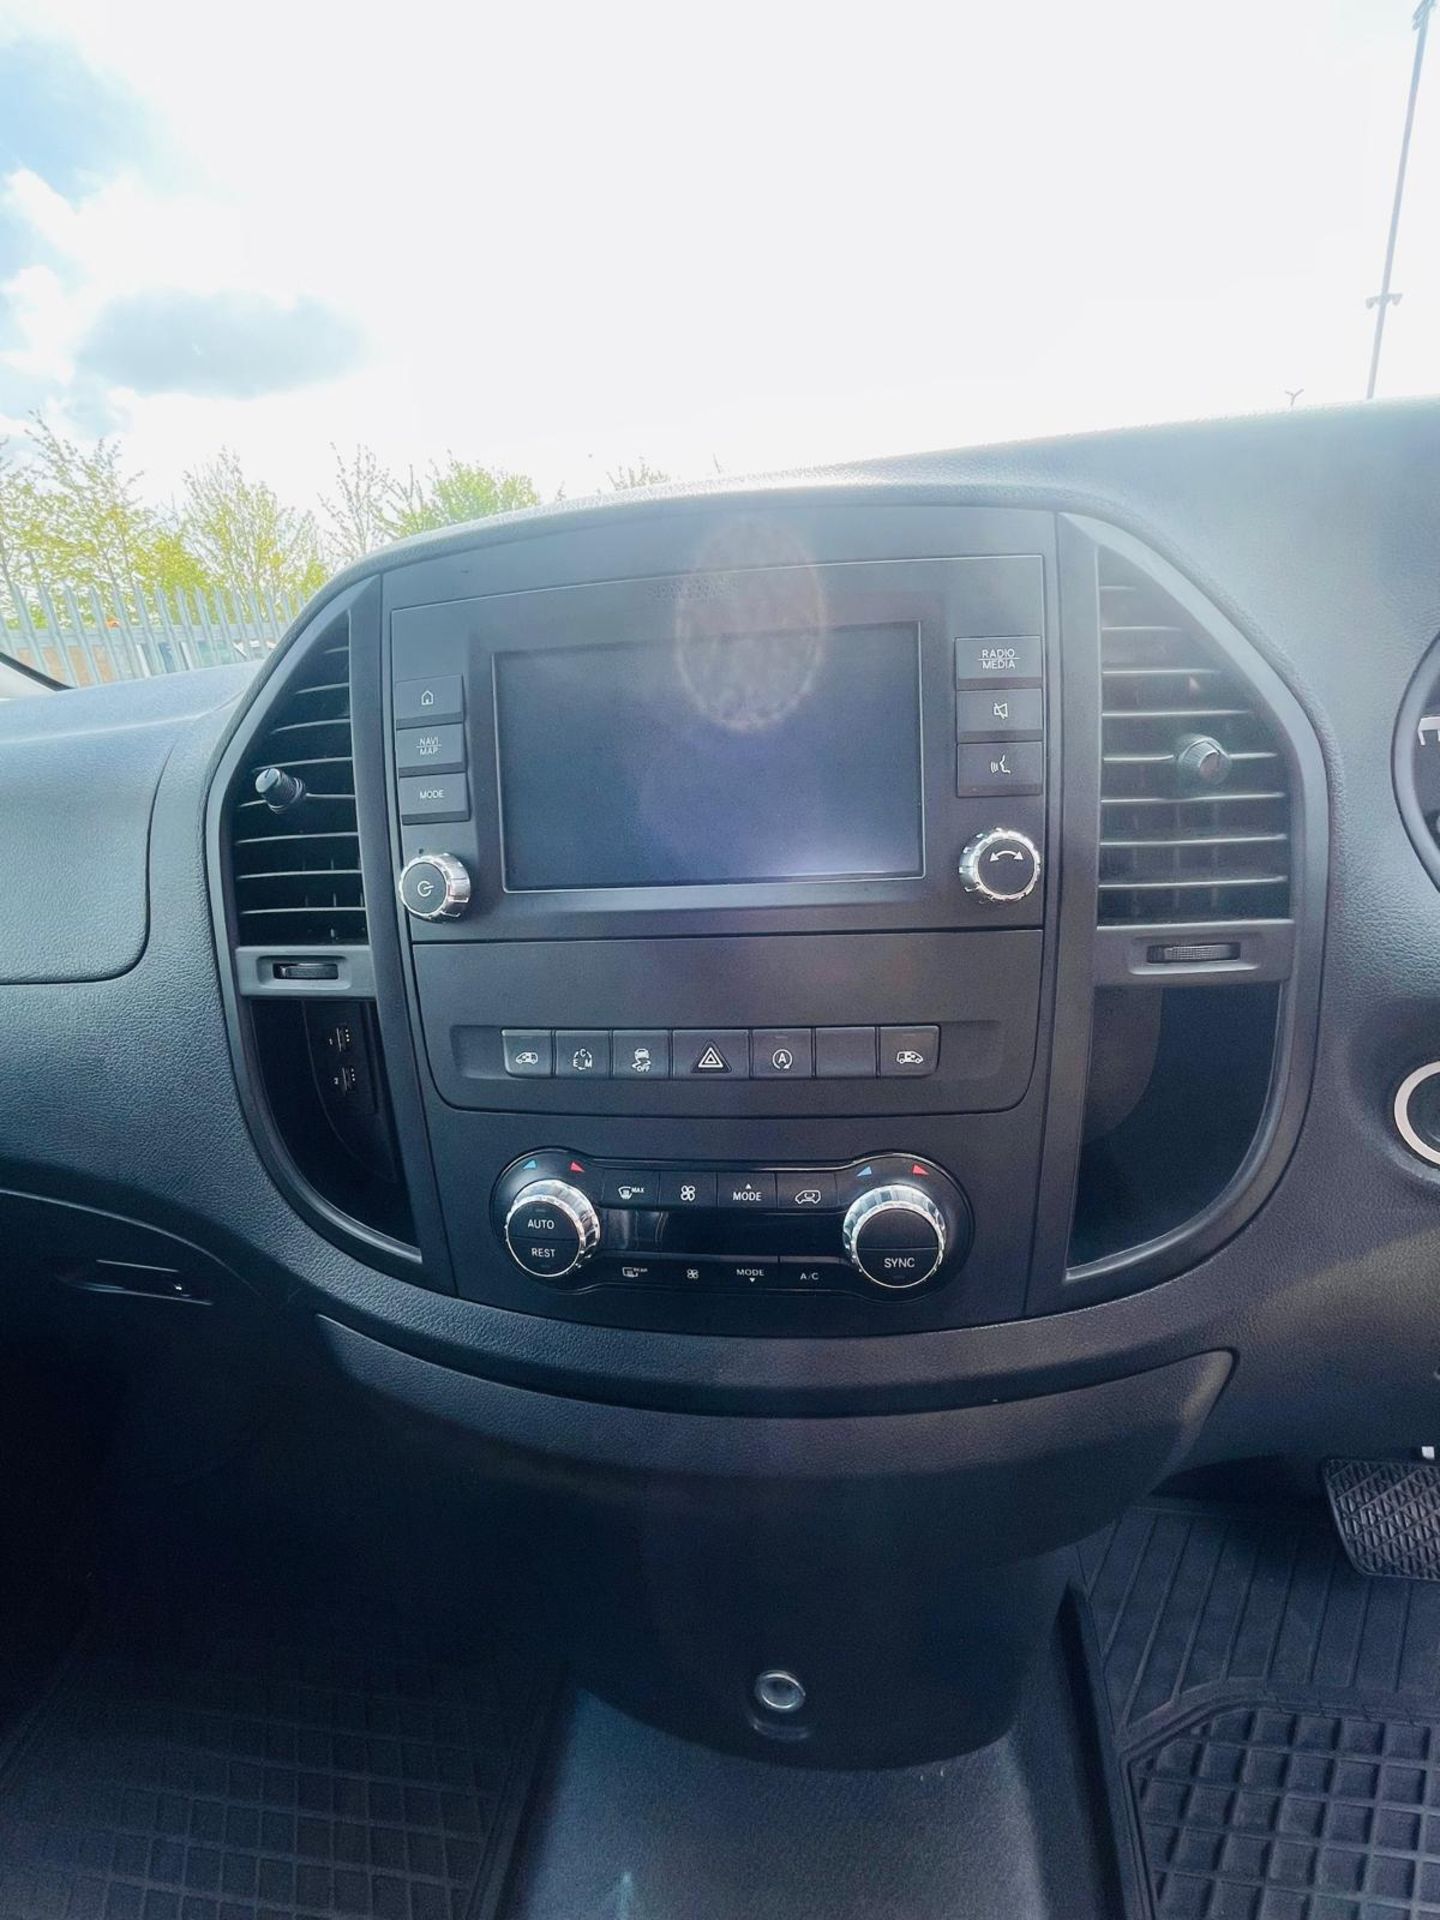 Mercedes-Benz Vito Premium 2.1 119 CDI 7G Tronic Crew Cab LWB Automatic 2019'19 Reg'- Alloy Wheels - Image 19 of 31